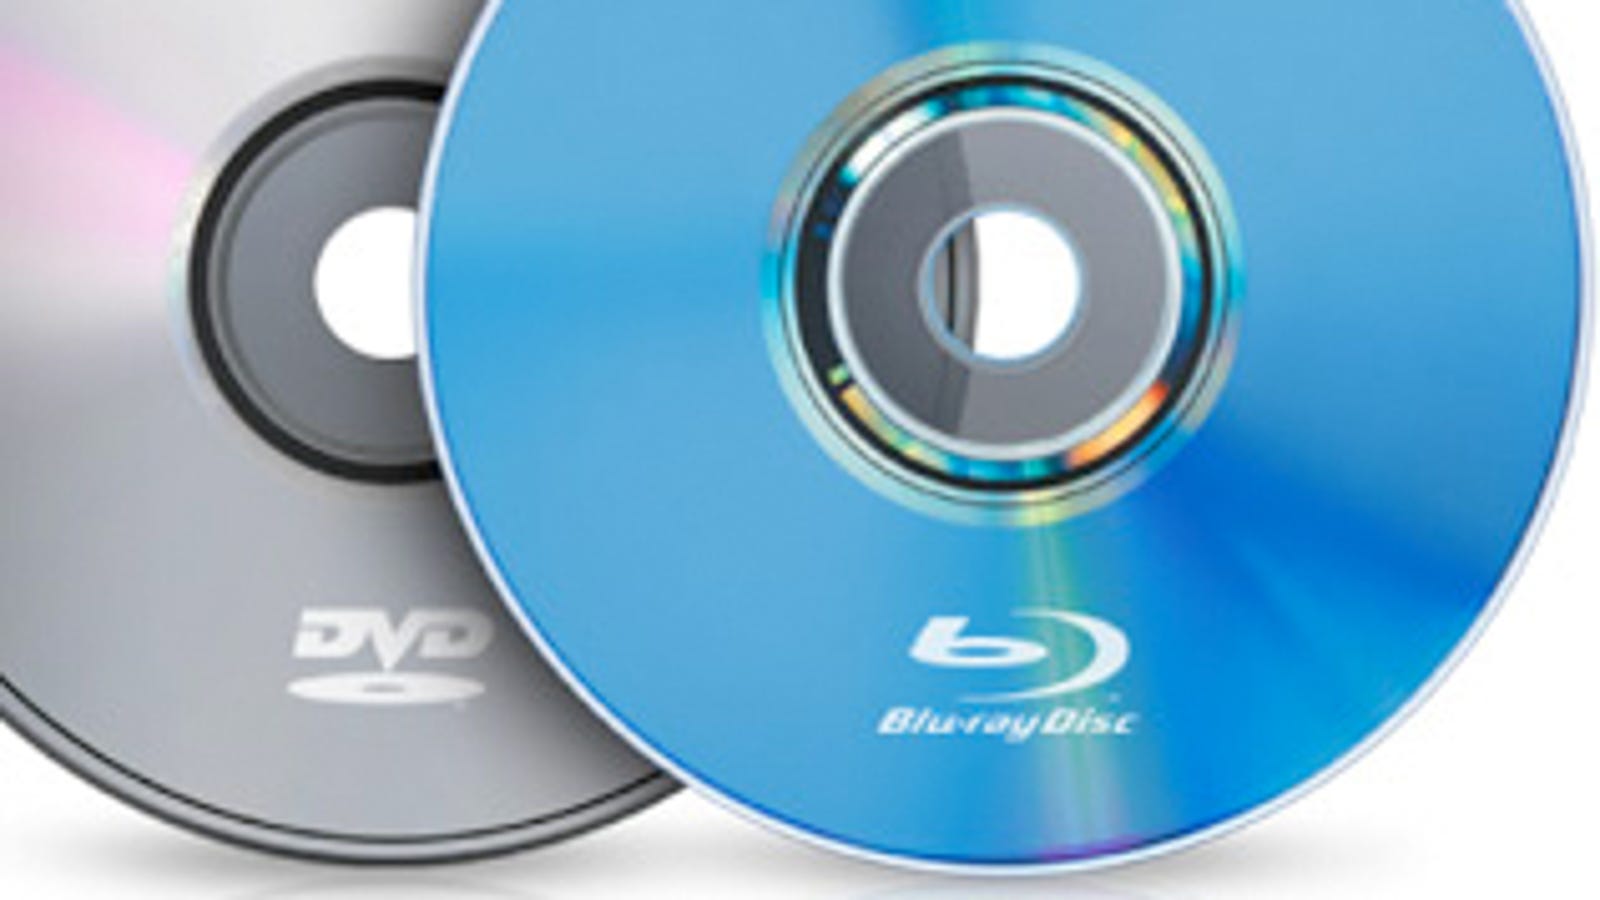 Blu Ray Discs Increasing In Capacity To 128gb